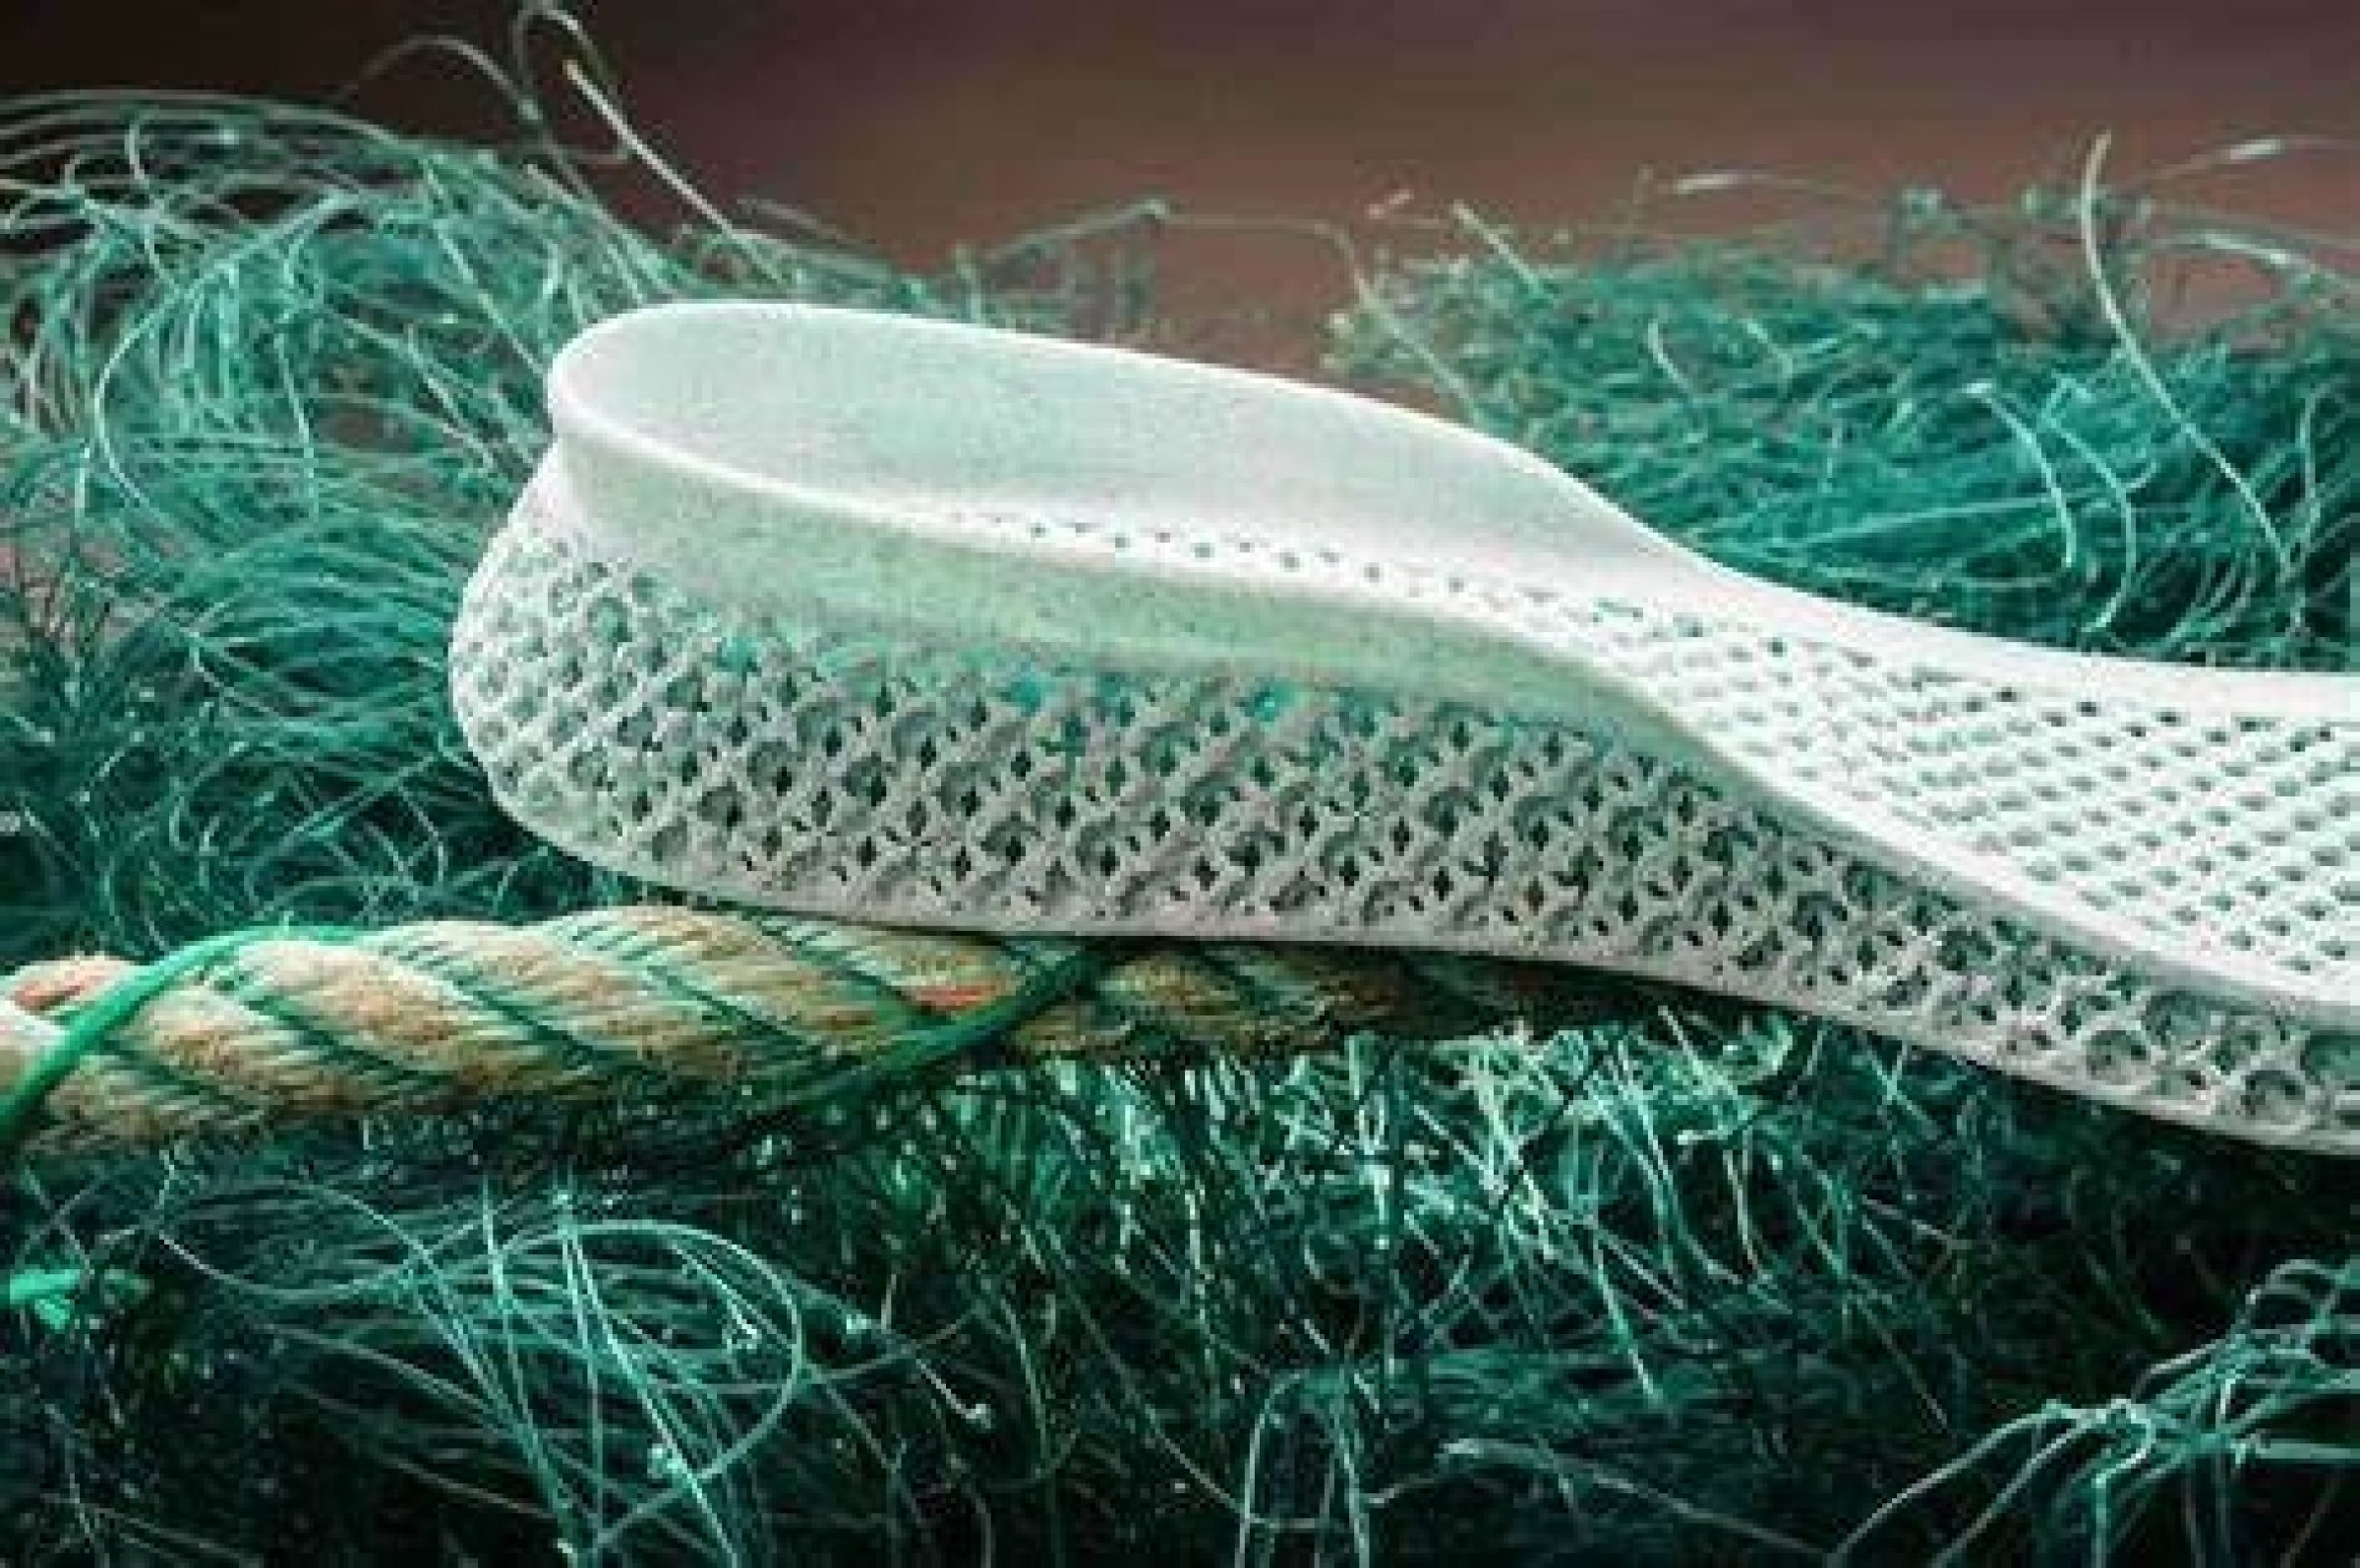 adidas sneakers ocean plastic